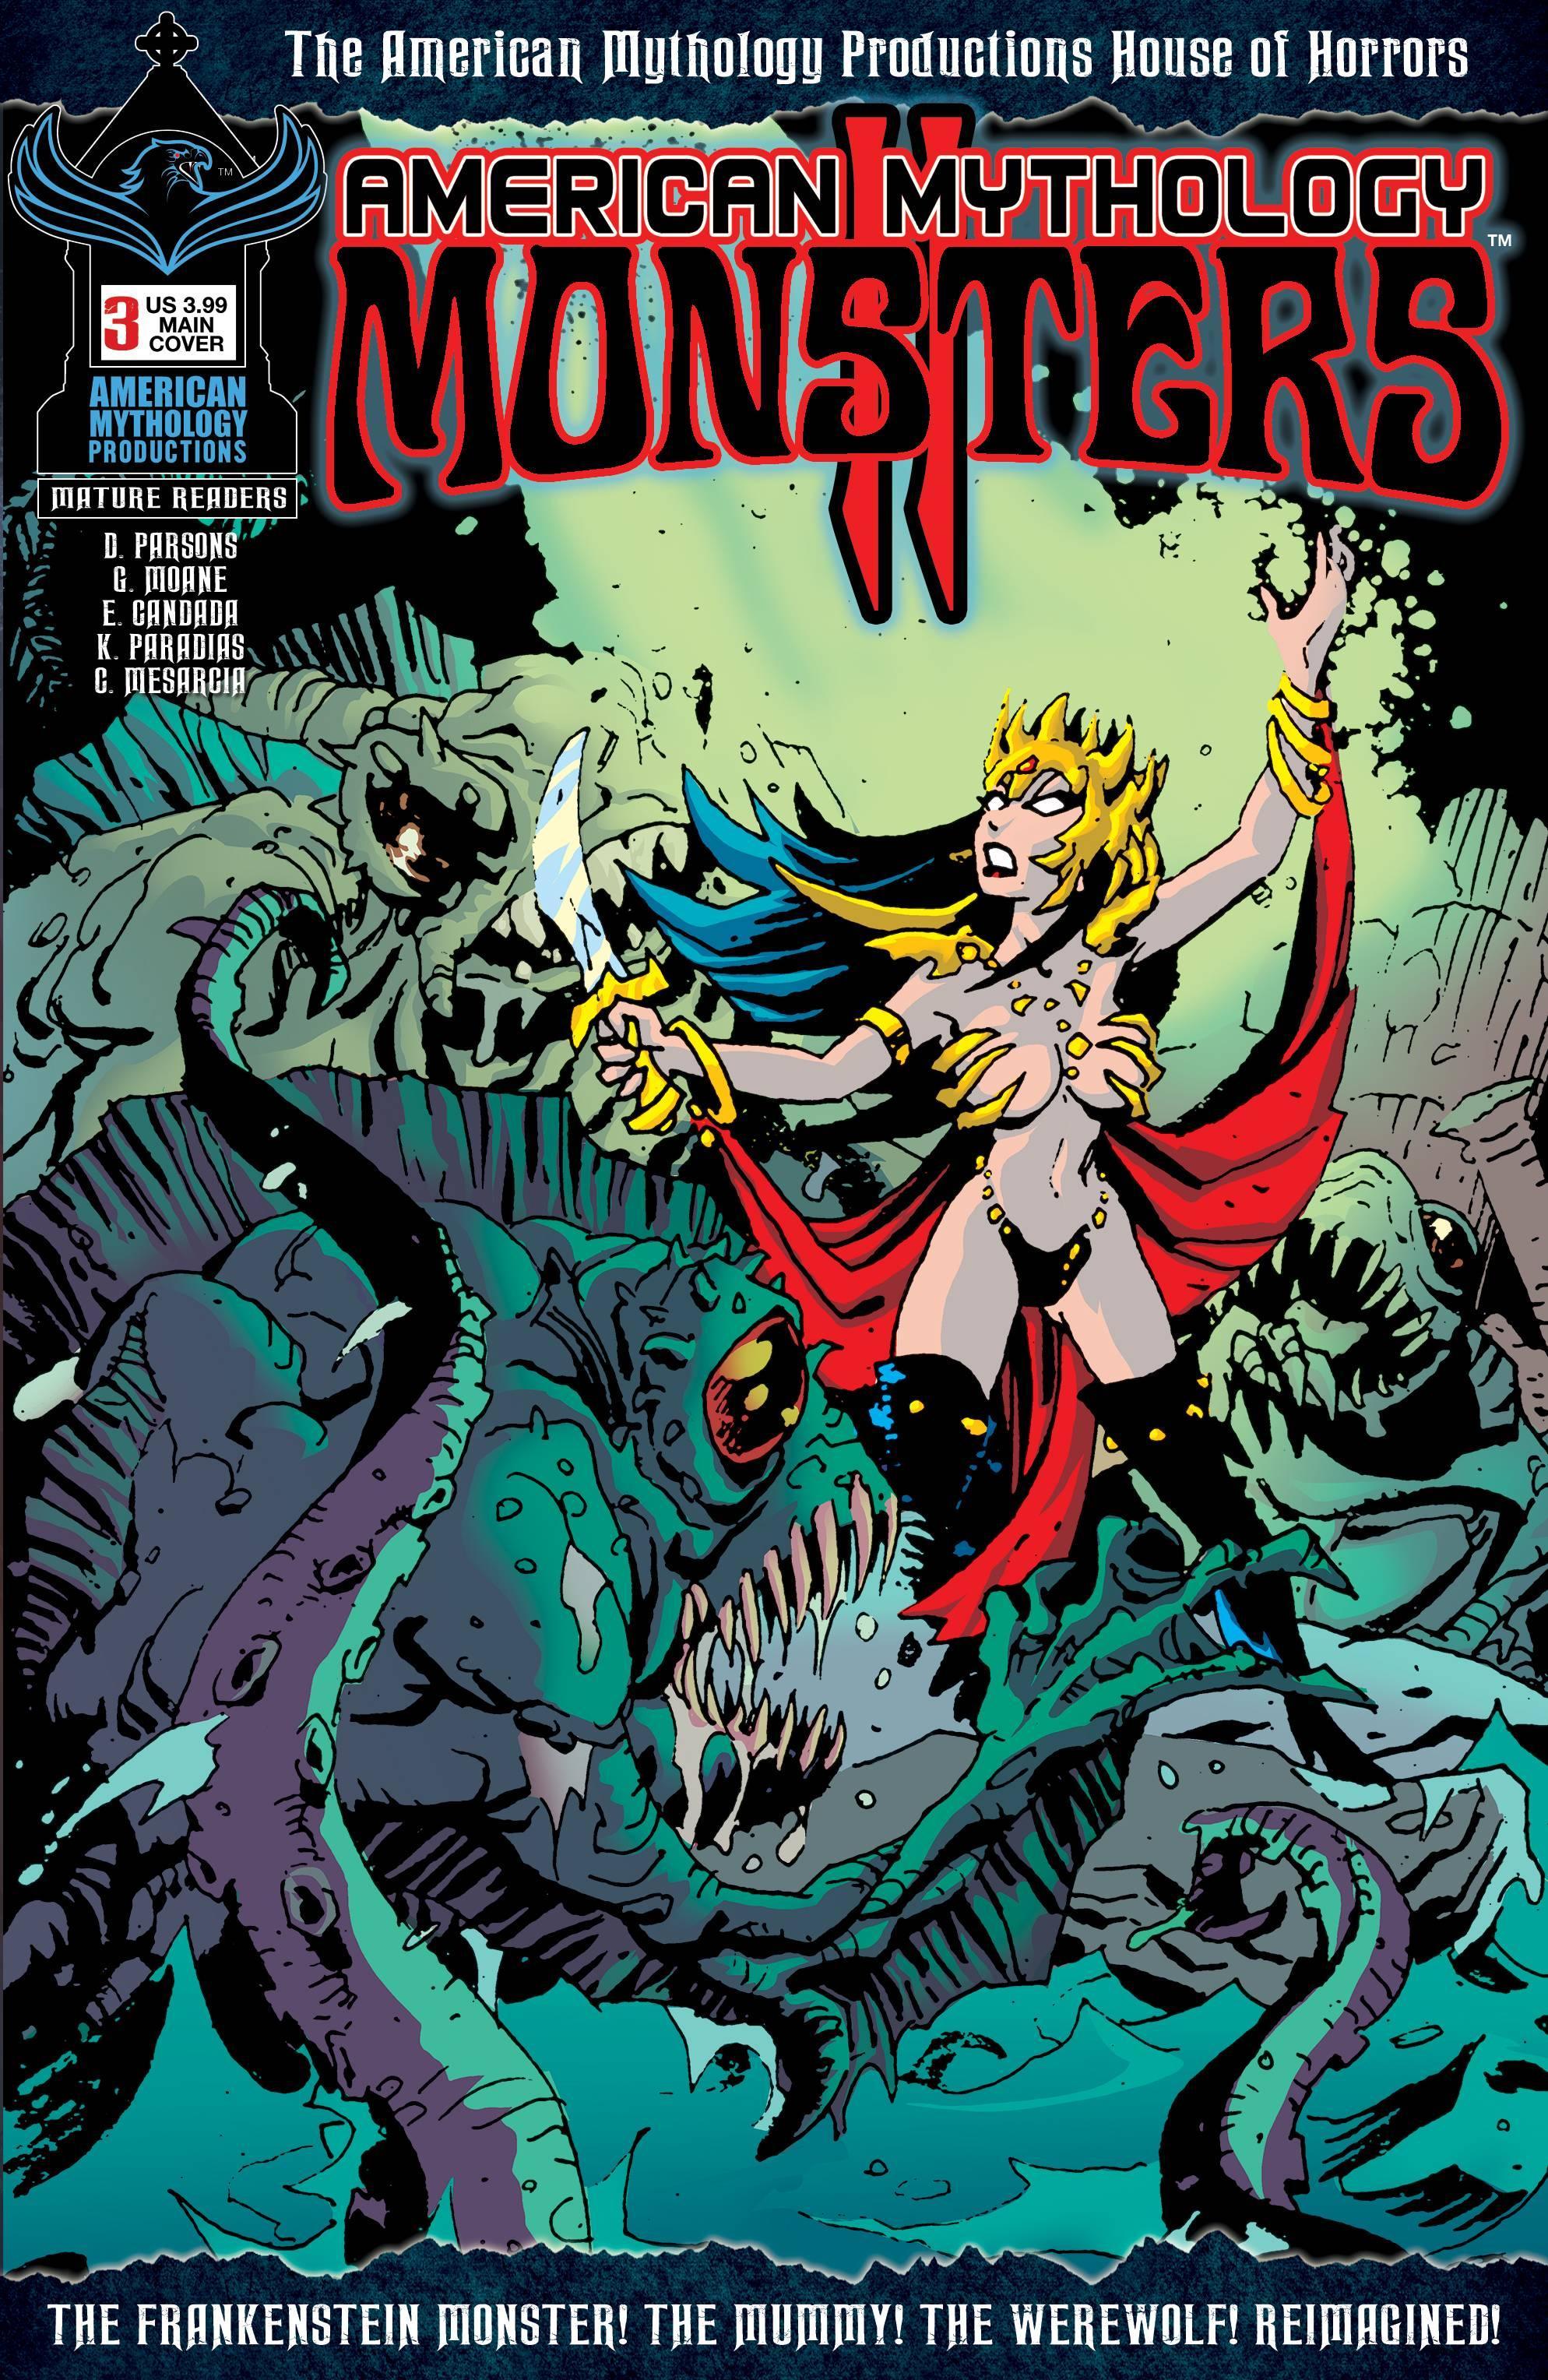 AMERICAN MYTHOLOGY MONSTERS VOL 2 #3 CVR A VOKES - Kings Comics